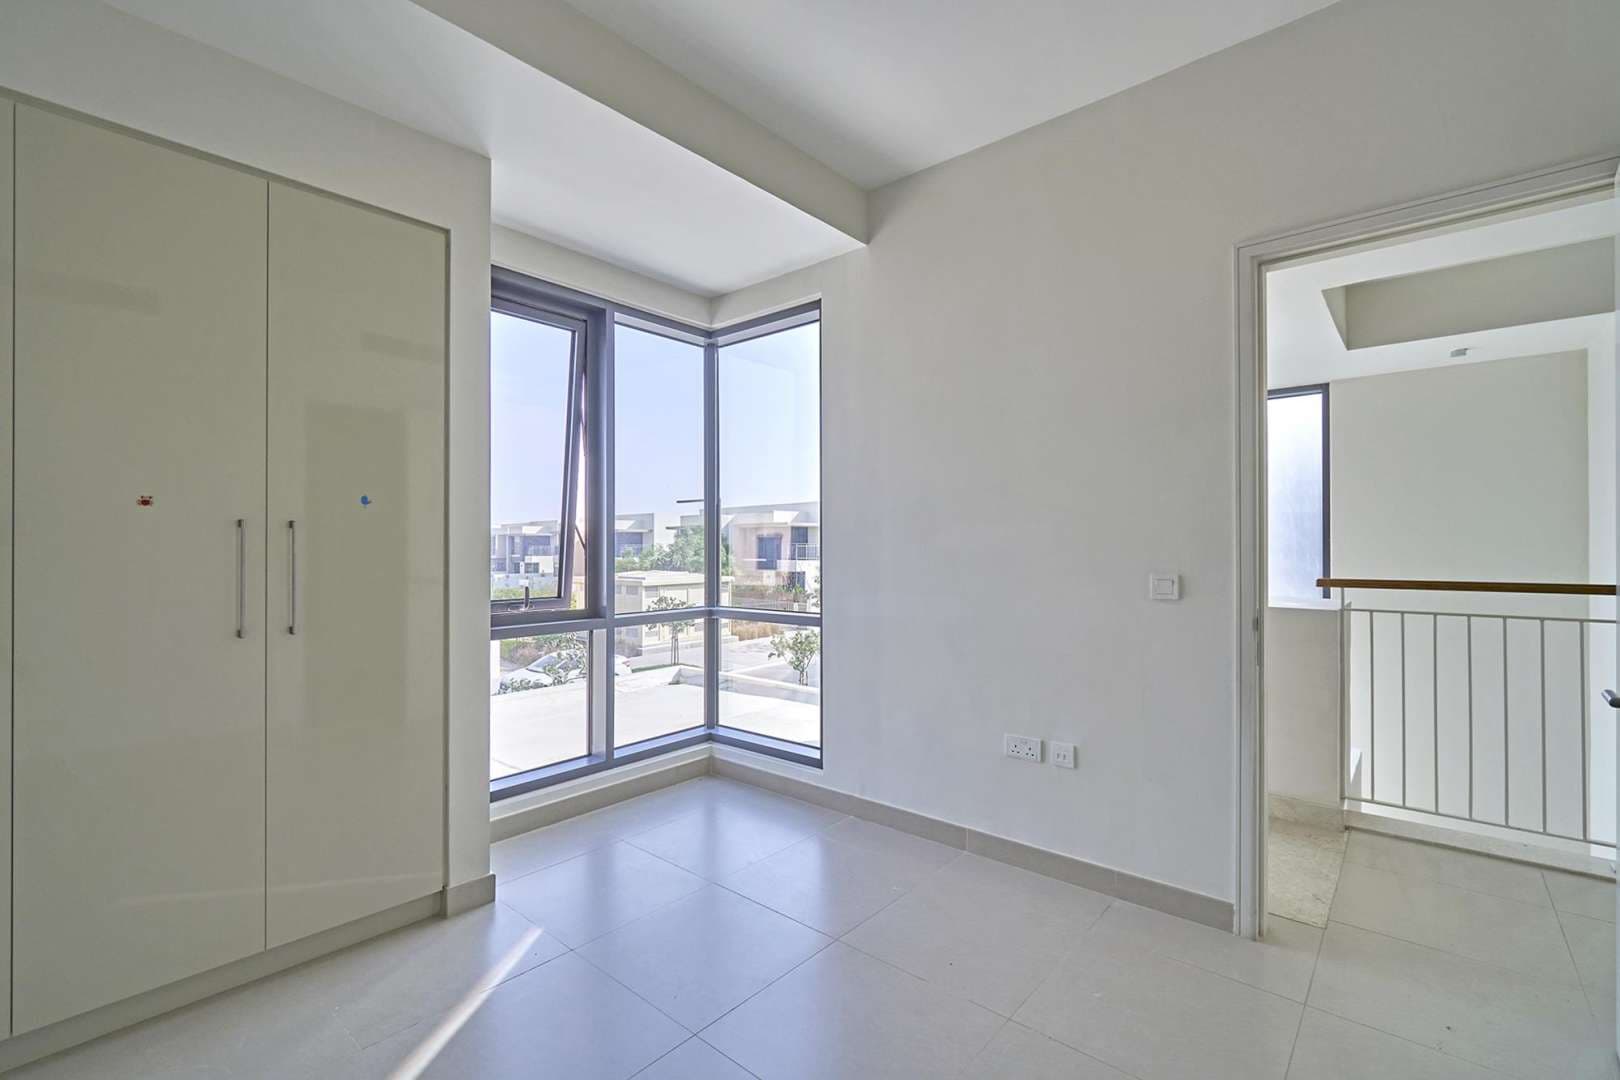 4 Bedroom Townhouse For Rent Maple At Dubai Hills Estate Lp05957 965f7ba16c00b80.jpg